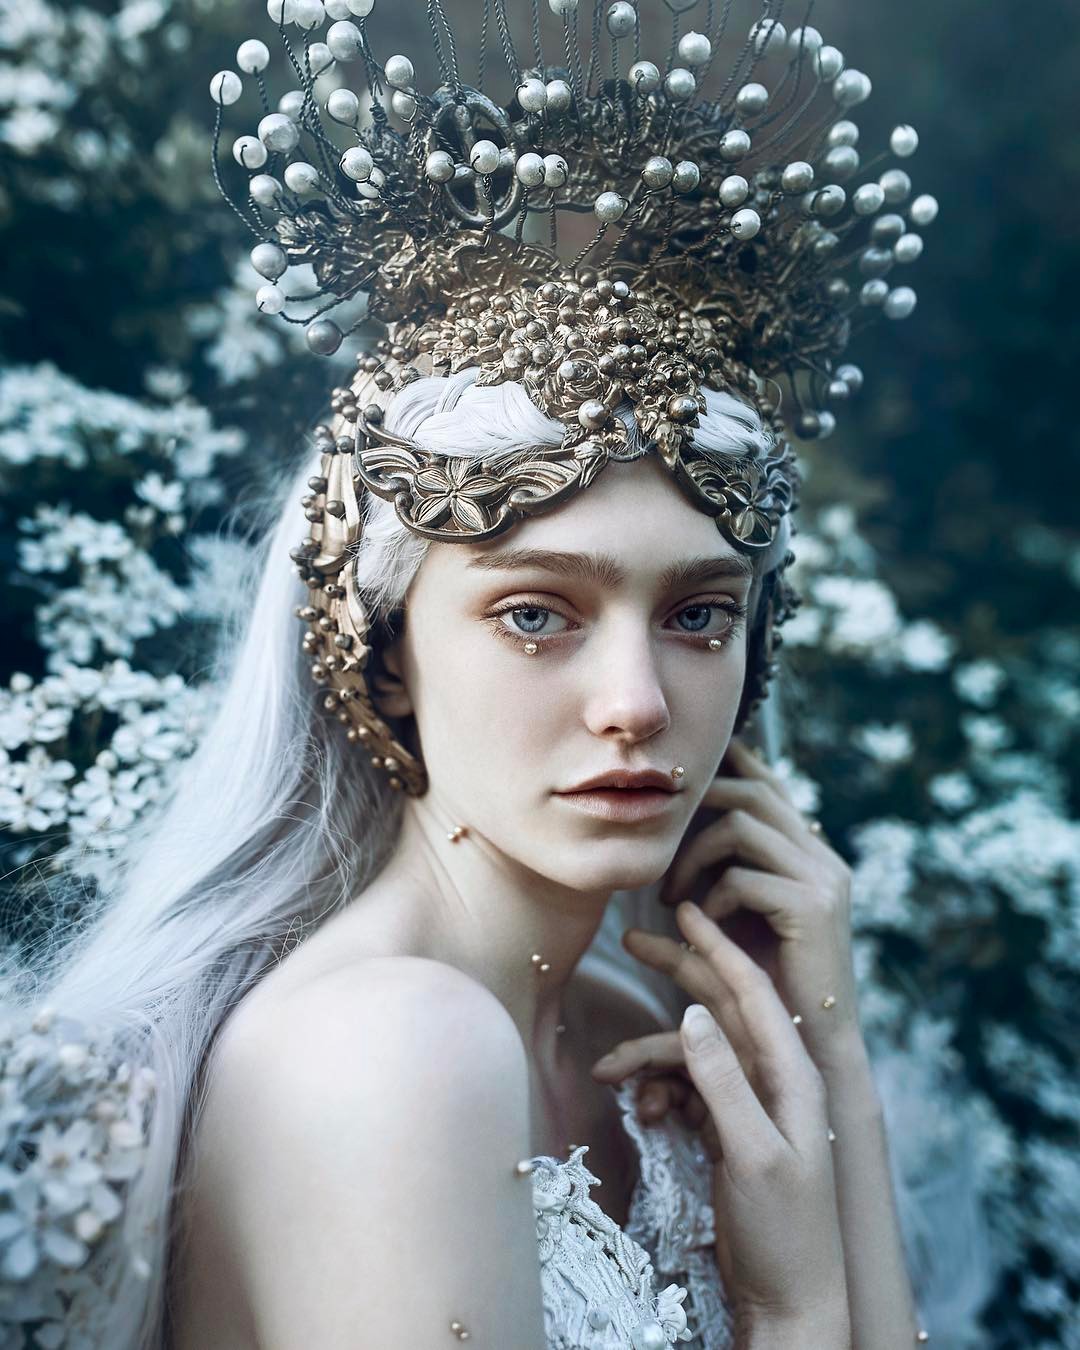 Impressive Fairy Tale Photos by Bella Kotak